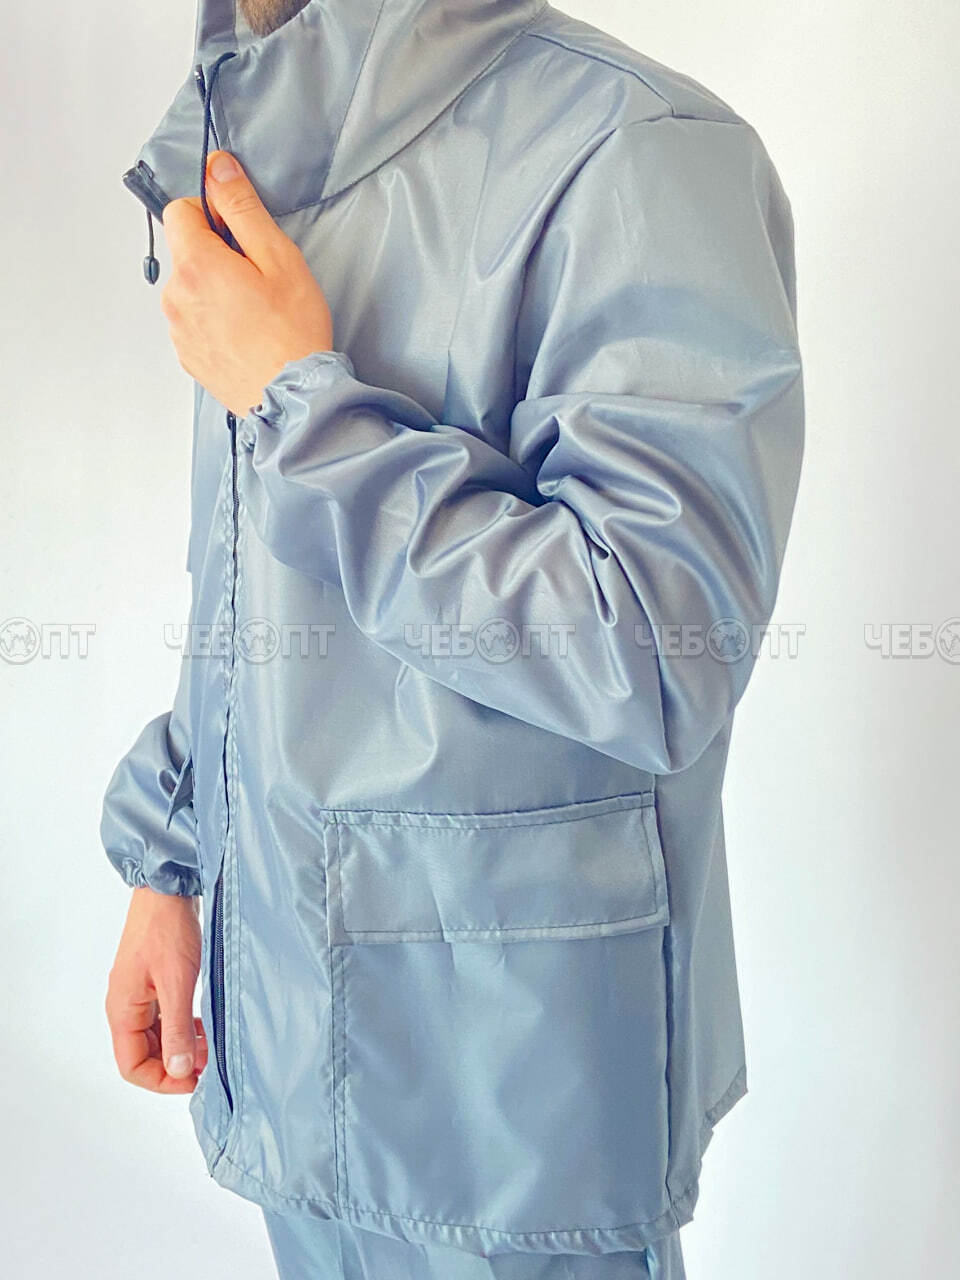 Костюм-дождевик (куртка, брюки),ЧЕБПРО,размер 48-50,100% полиэстер, Арт. ДожКостМуж/серый, МПС [3/15] СобПр. ЧЕБОПТ.